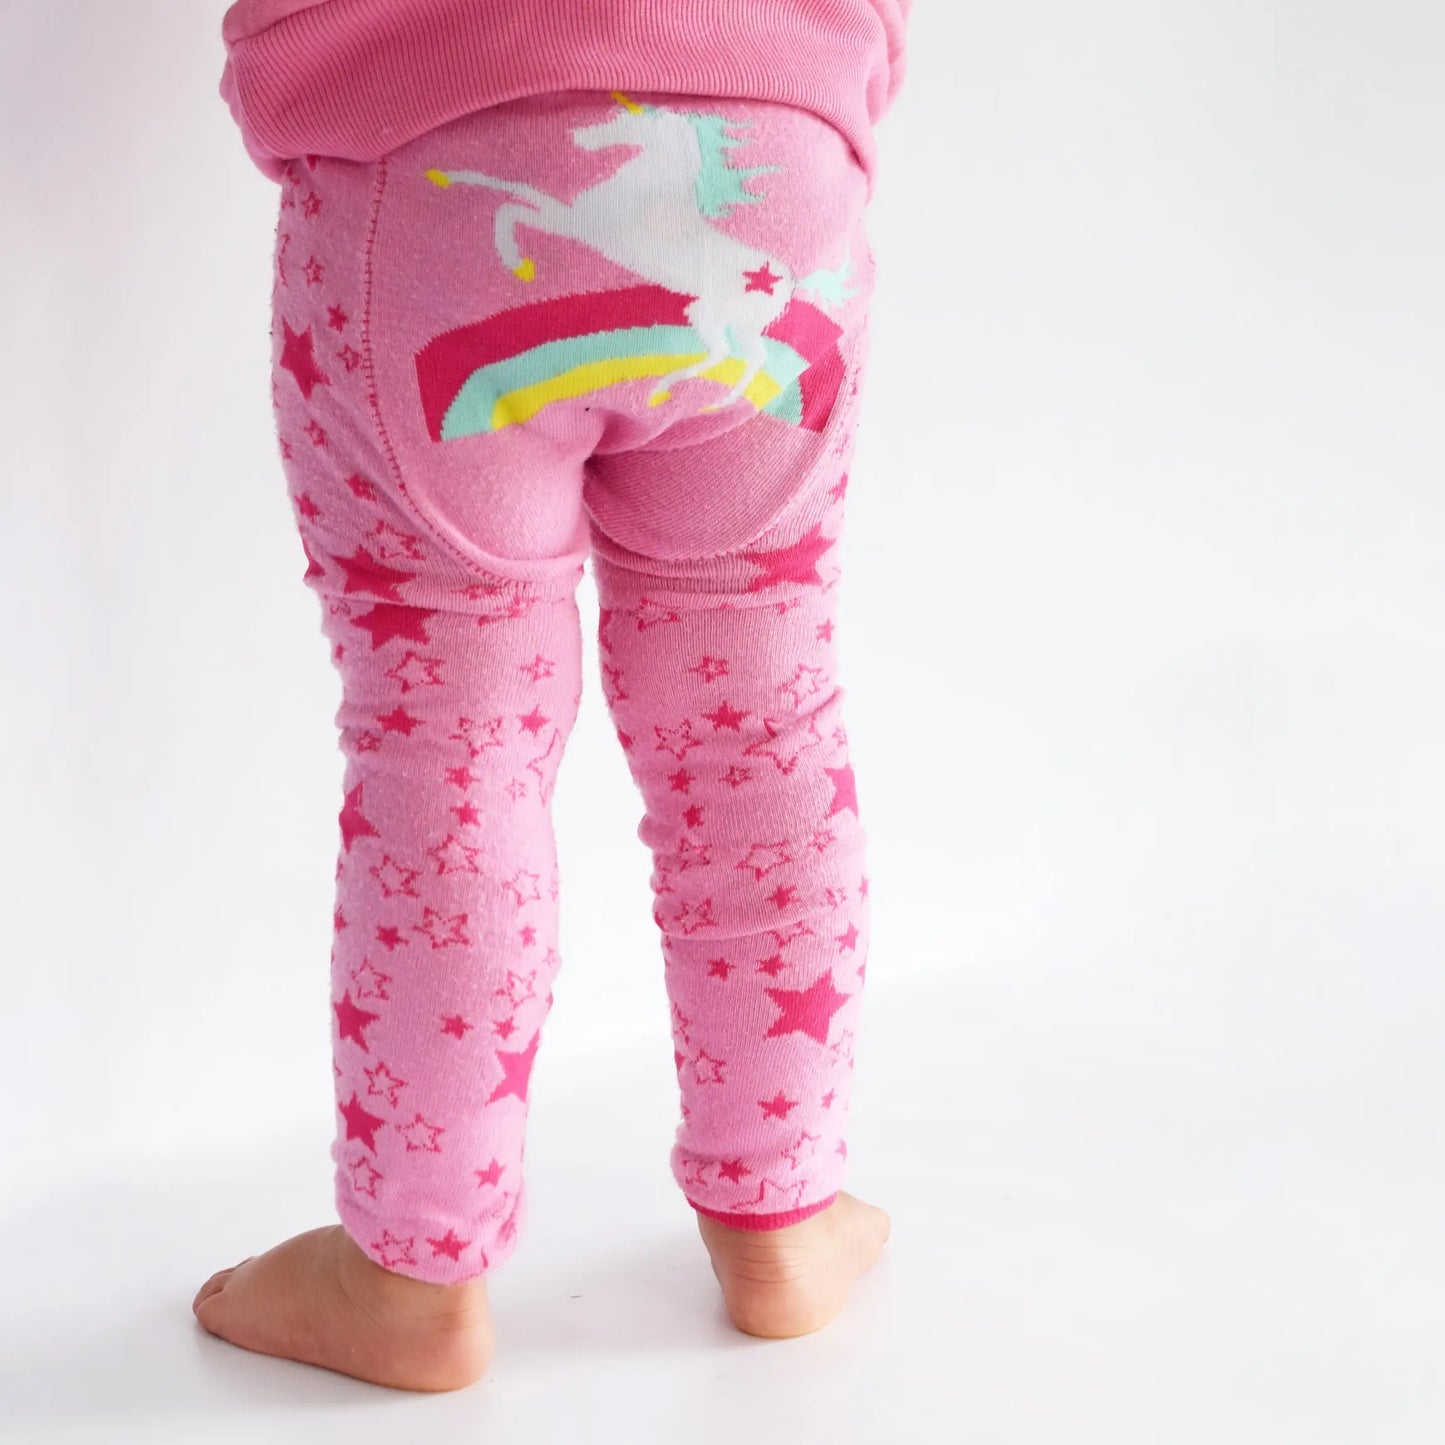 Doodle Pants rainbow unicorn leggings